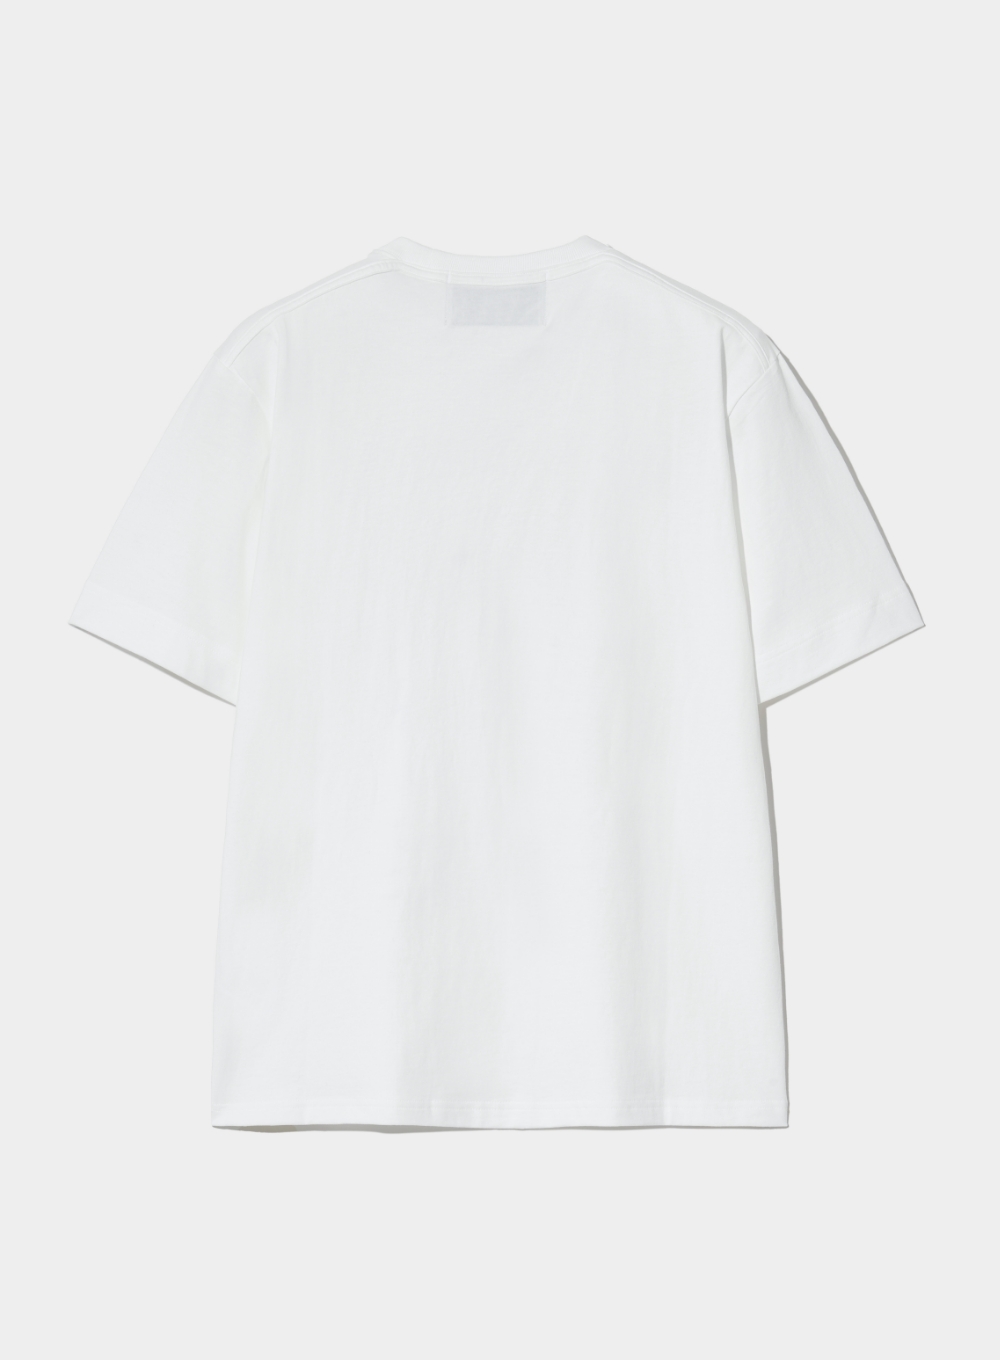 Paris Metro Graphic T-Shirt - White Blue